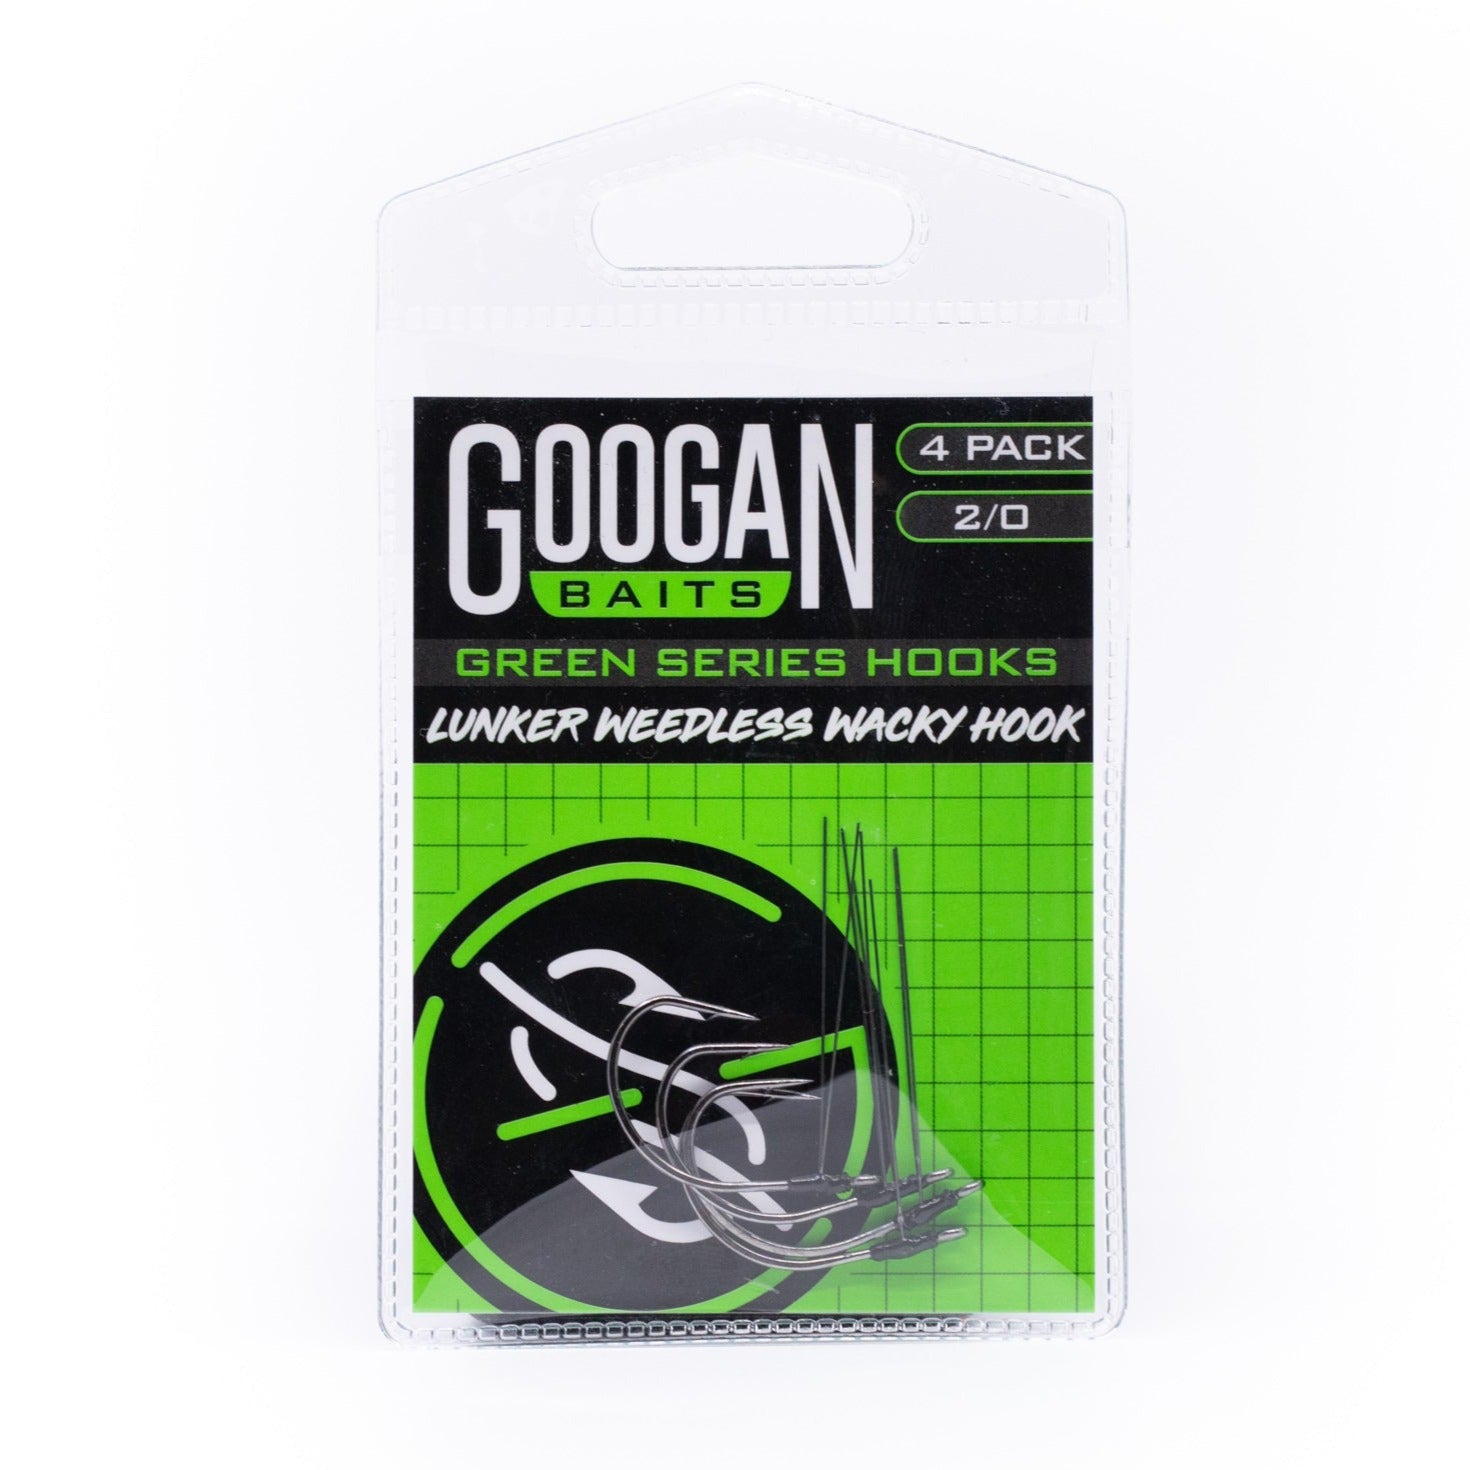 Googan Baits Green Series Lunker Weedless Wacky Hook 1/0 4Pack